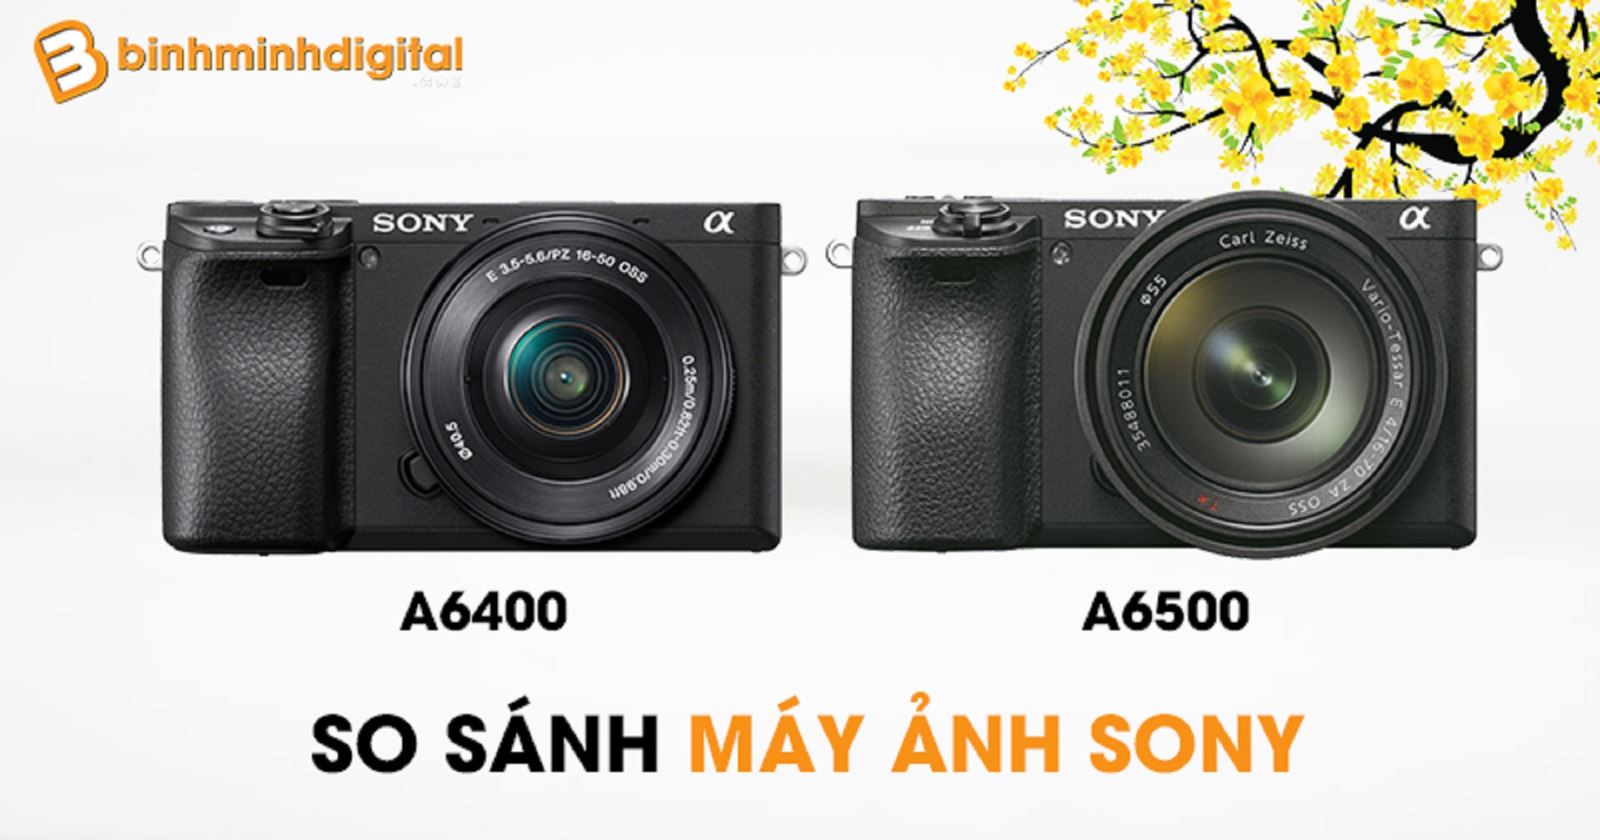 So sánh máy ảnh Sony a6400 và a6500